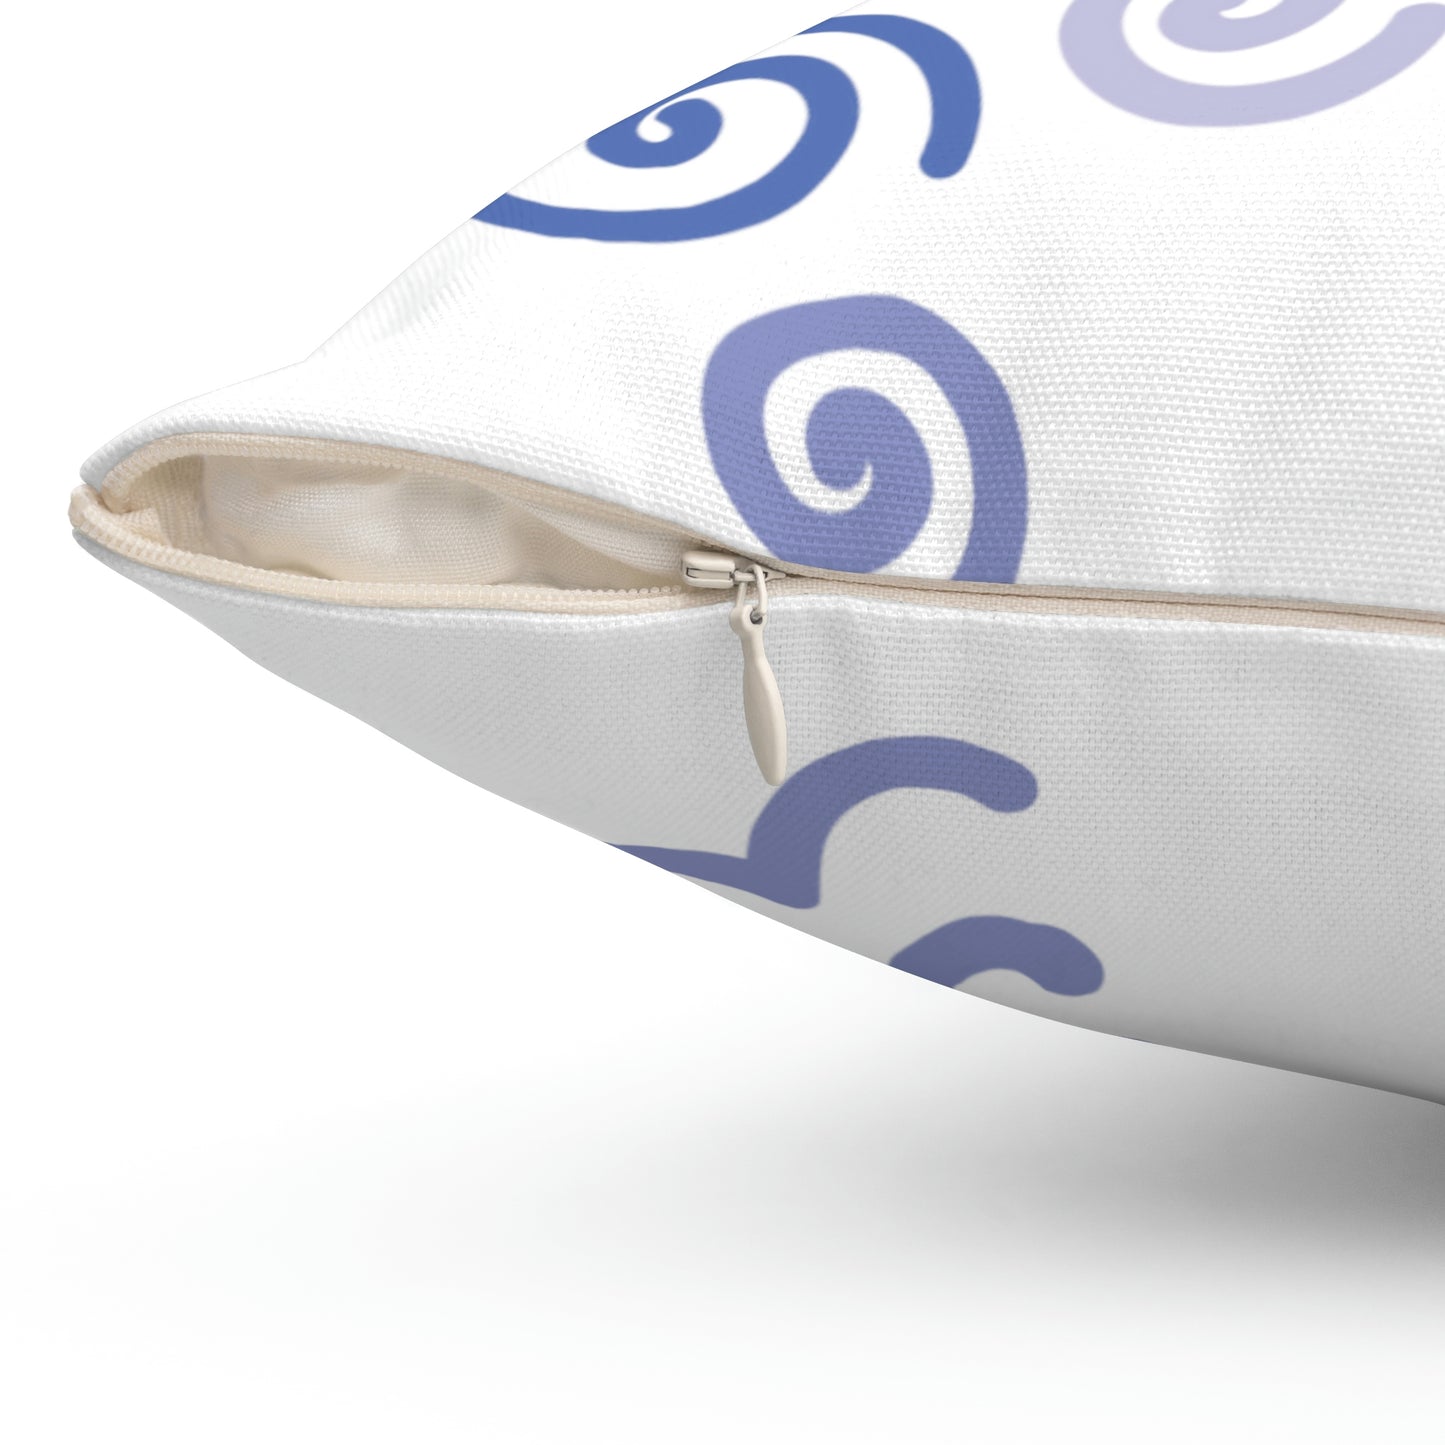 Swirl pillow - Spun Polyester Square Pillow